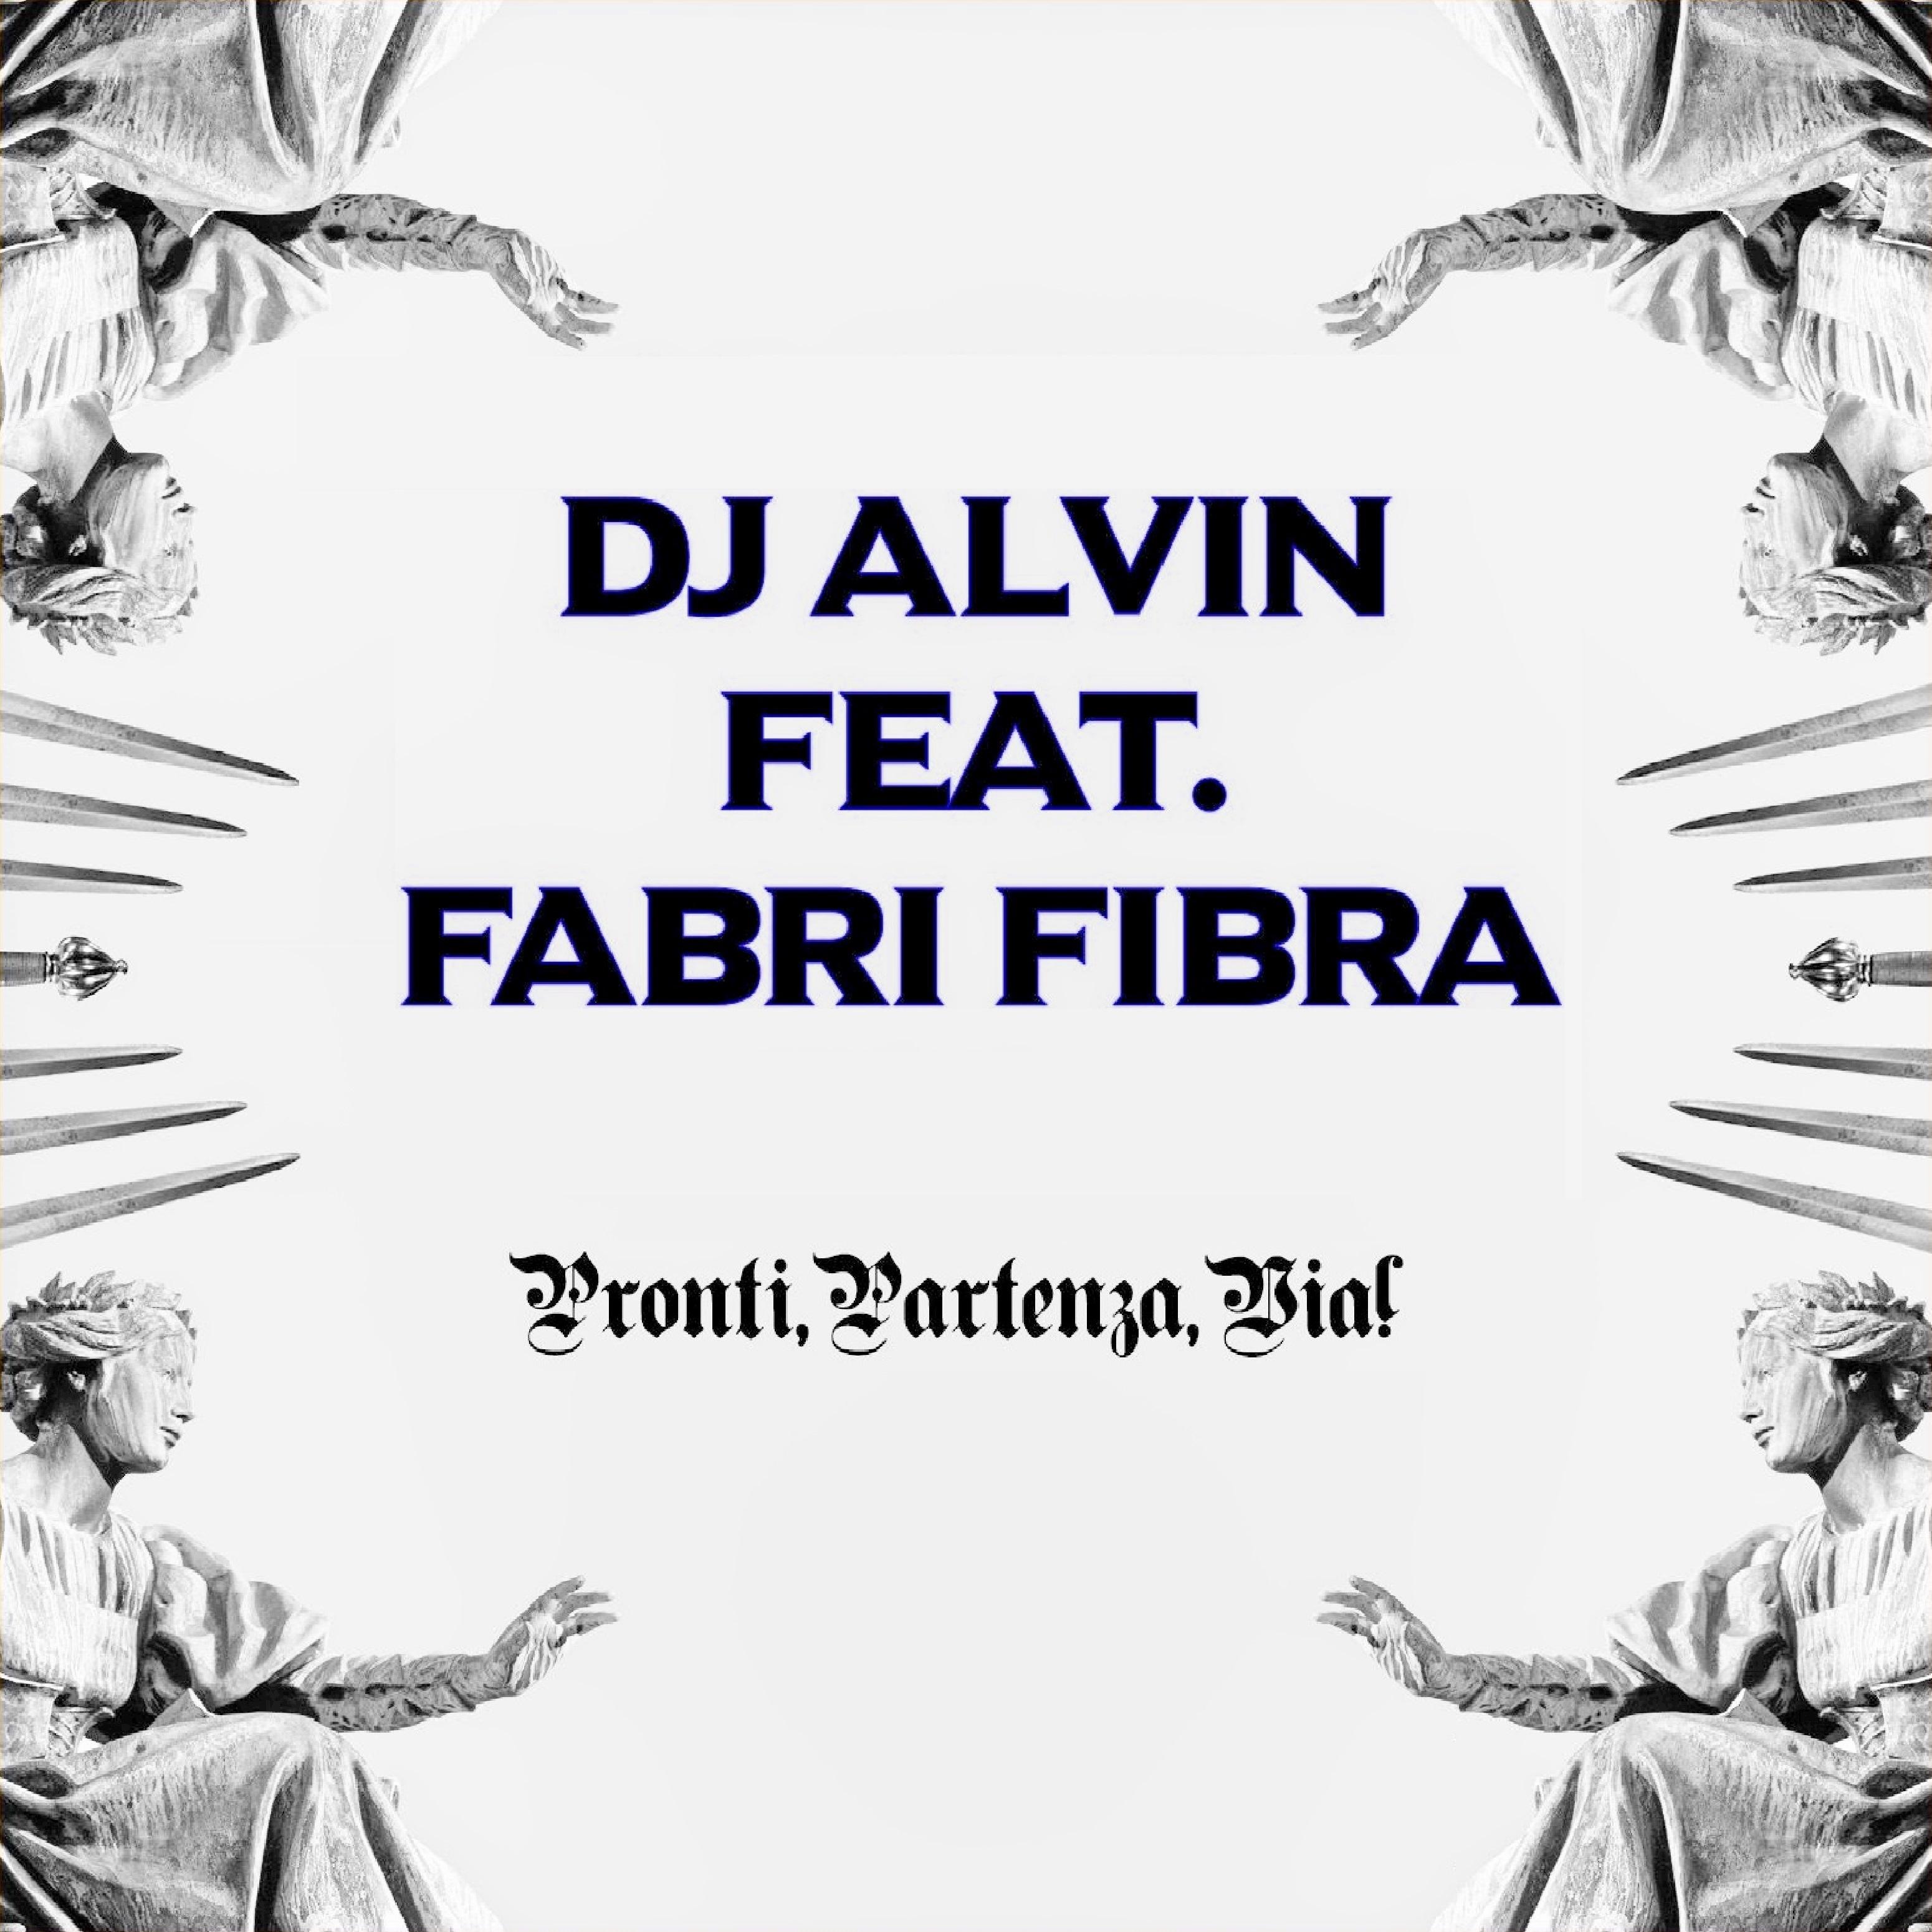 DJ Alvin Feat. Fabri Fibra - Pronti, Partenza,Via